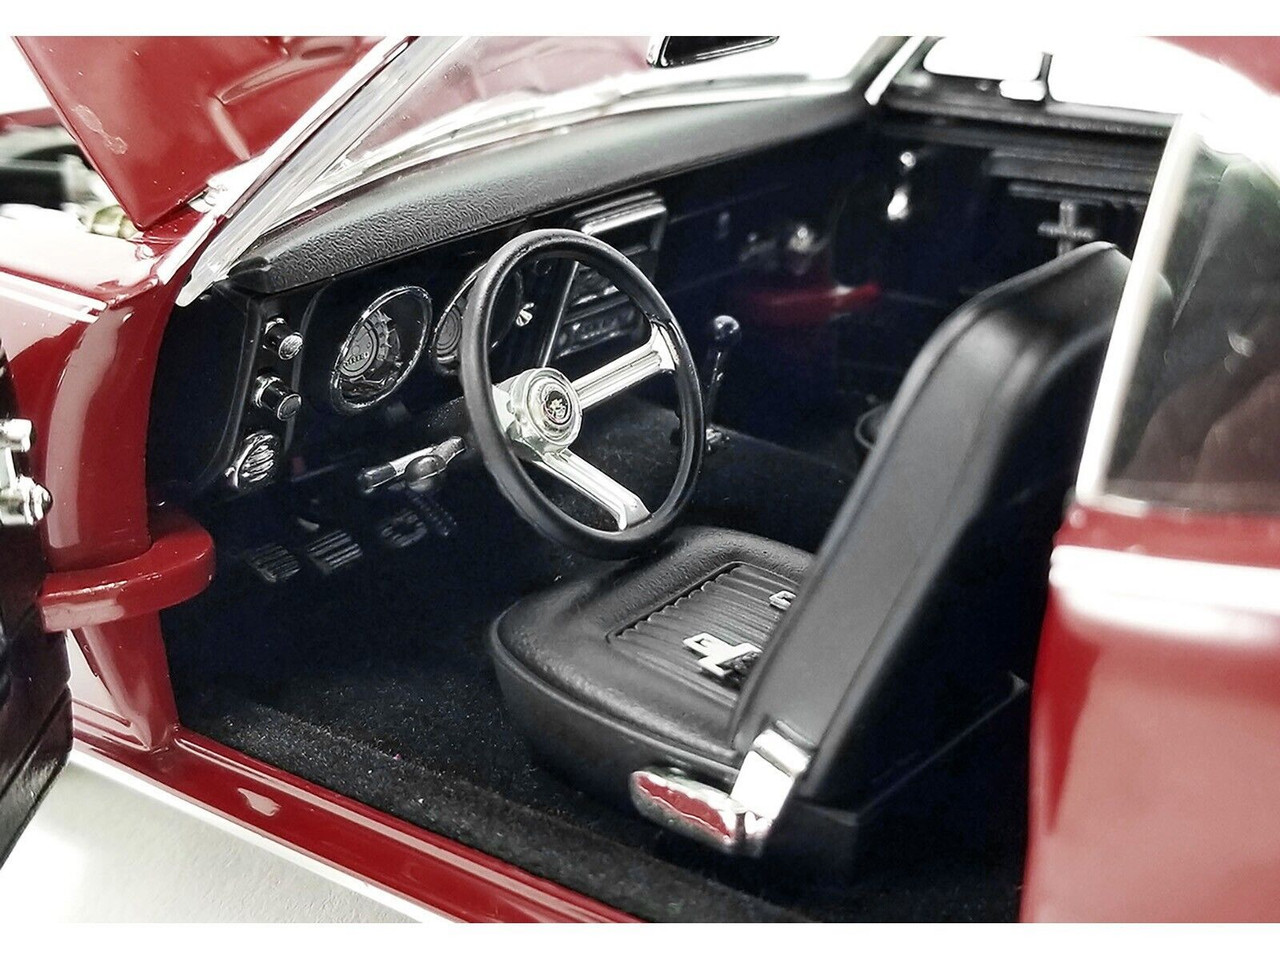 1/18 ACME 1967 Chevrolet Camaro First Yenko Super Camaro Produced (Red) Diecast Car Model